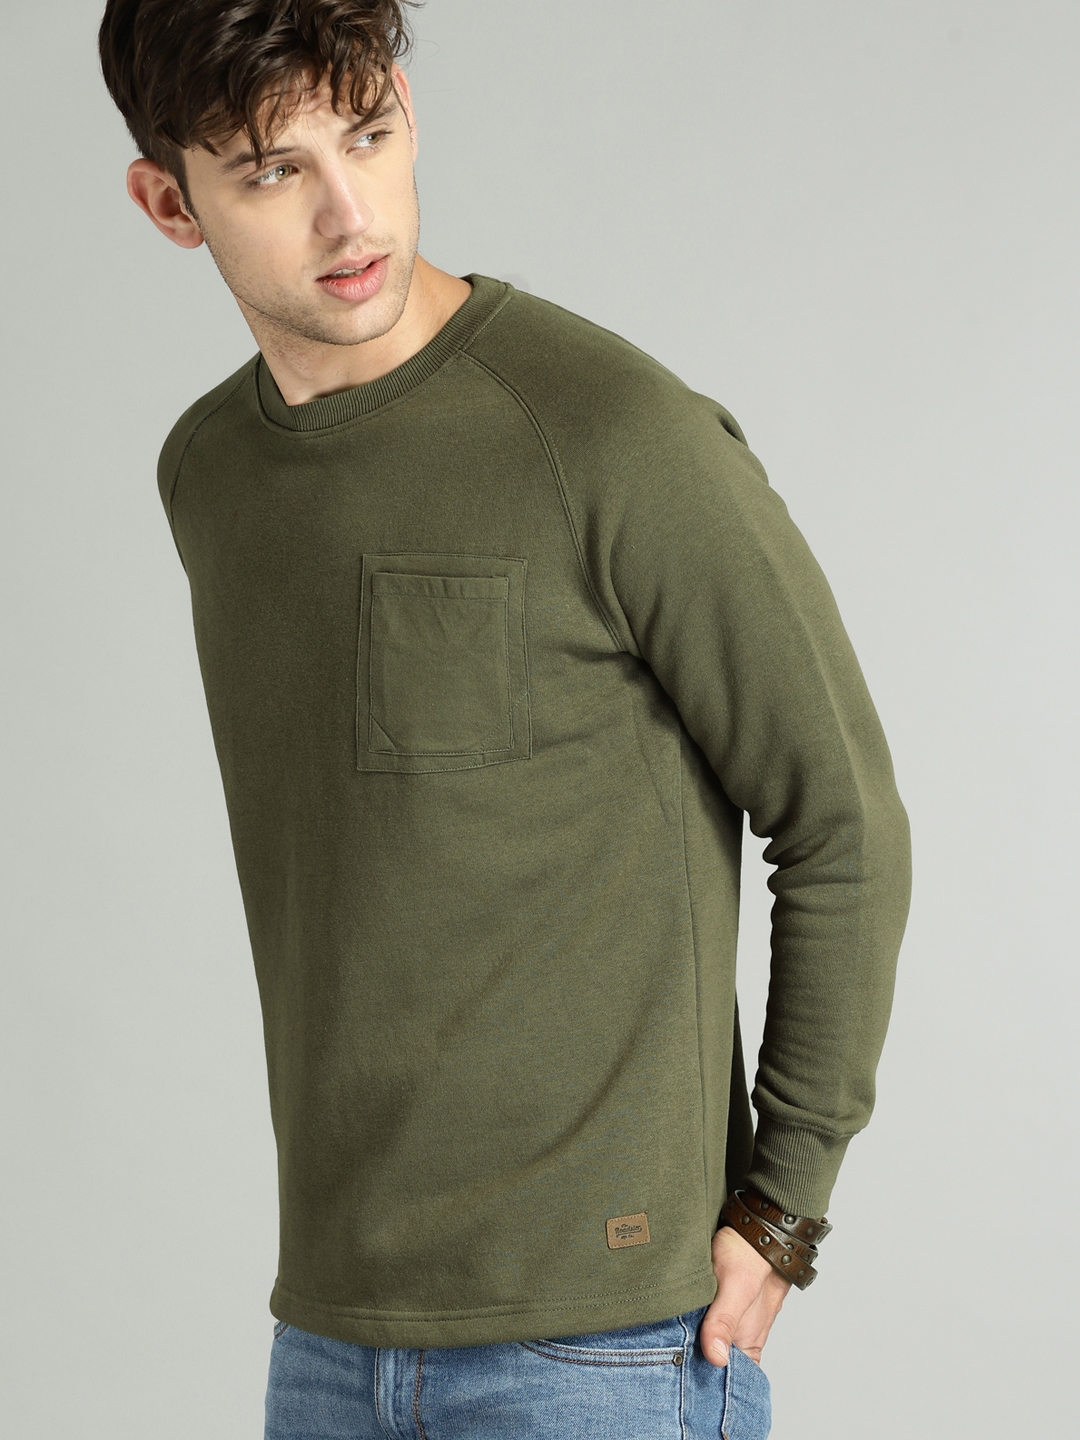 Cotton Blend Round Mens Plain Olive Green Solid Sweatshirt, Size: M-XL at  Rs 300/piece in Delhi